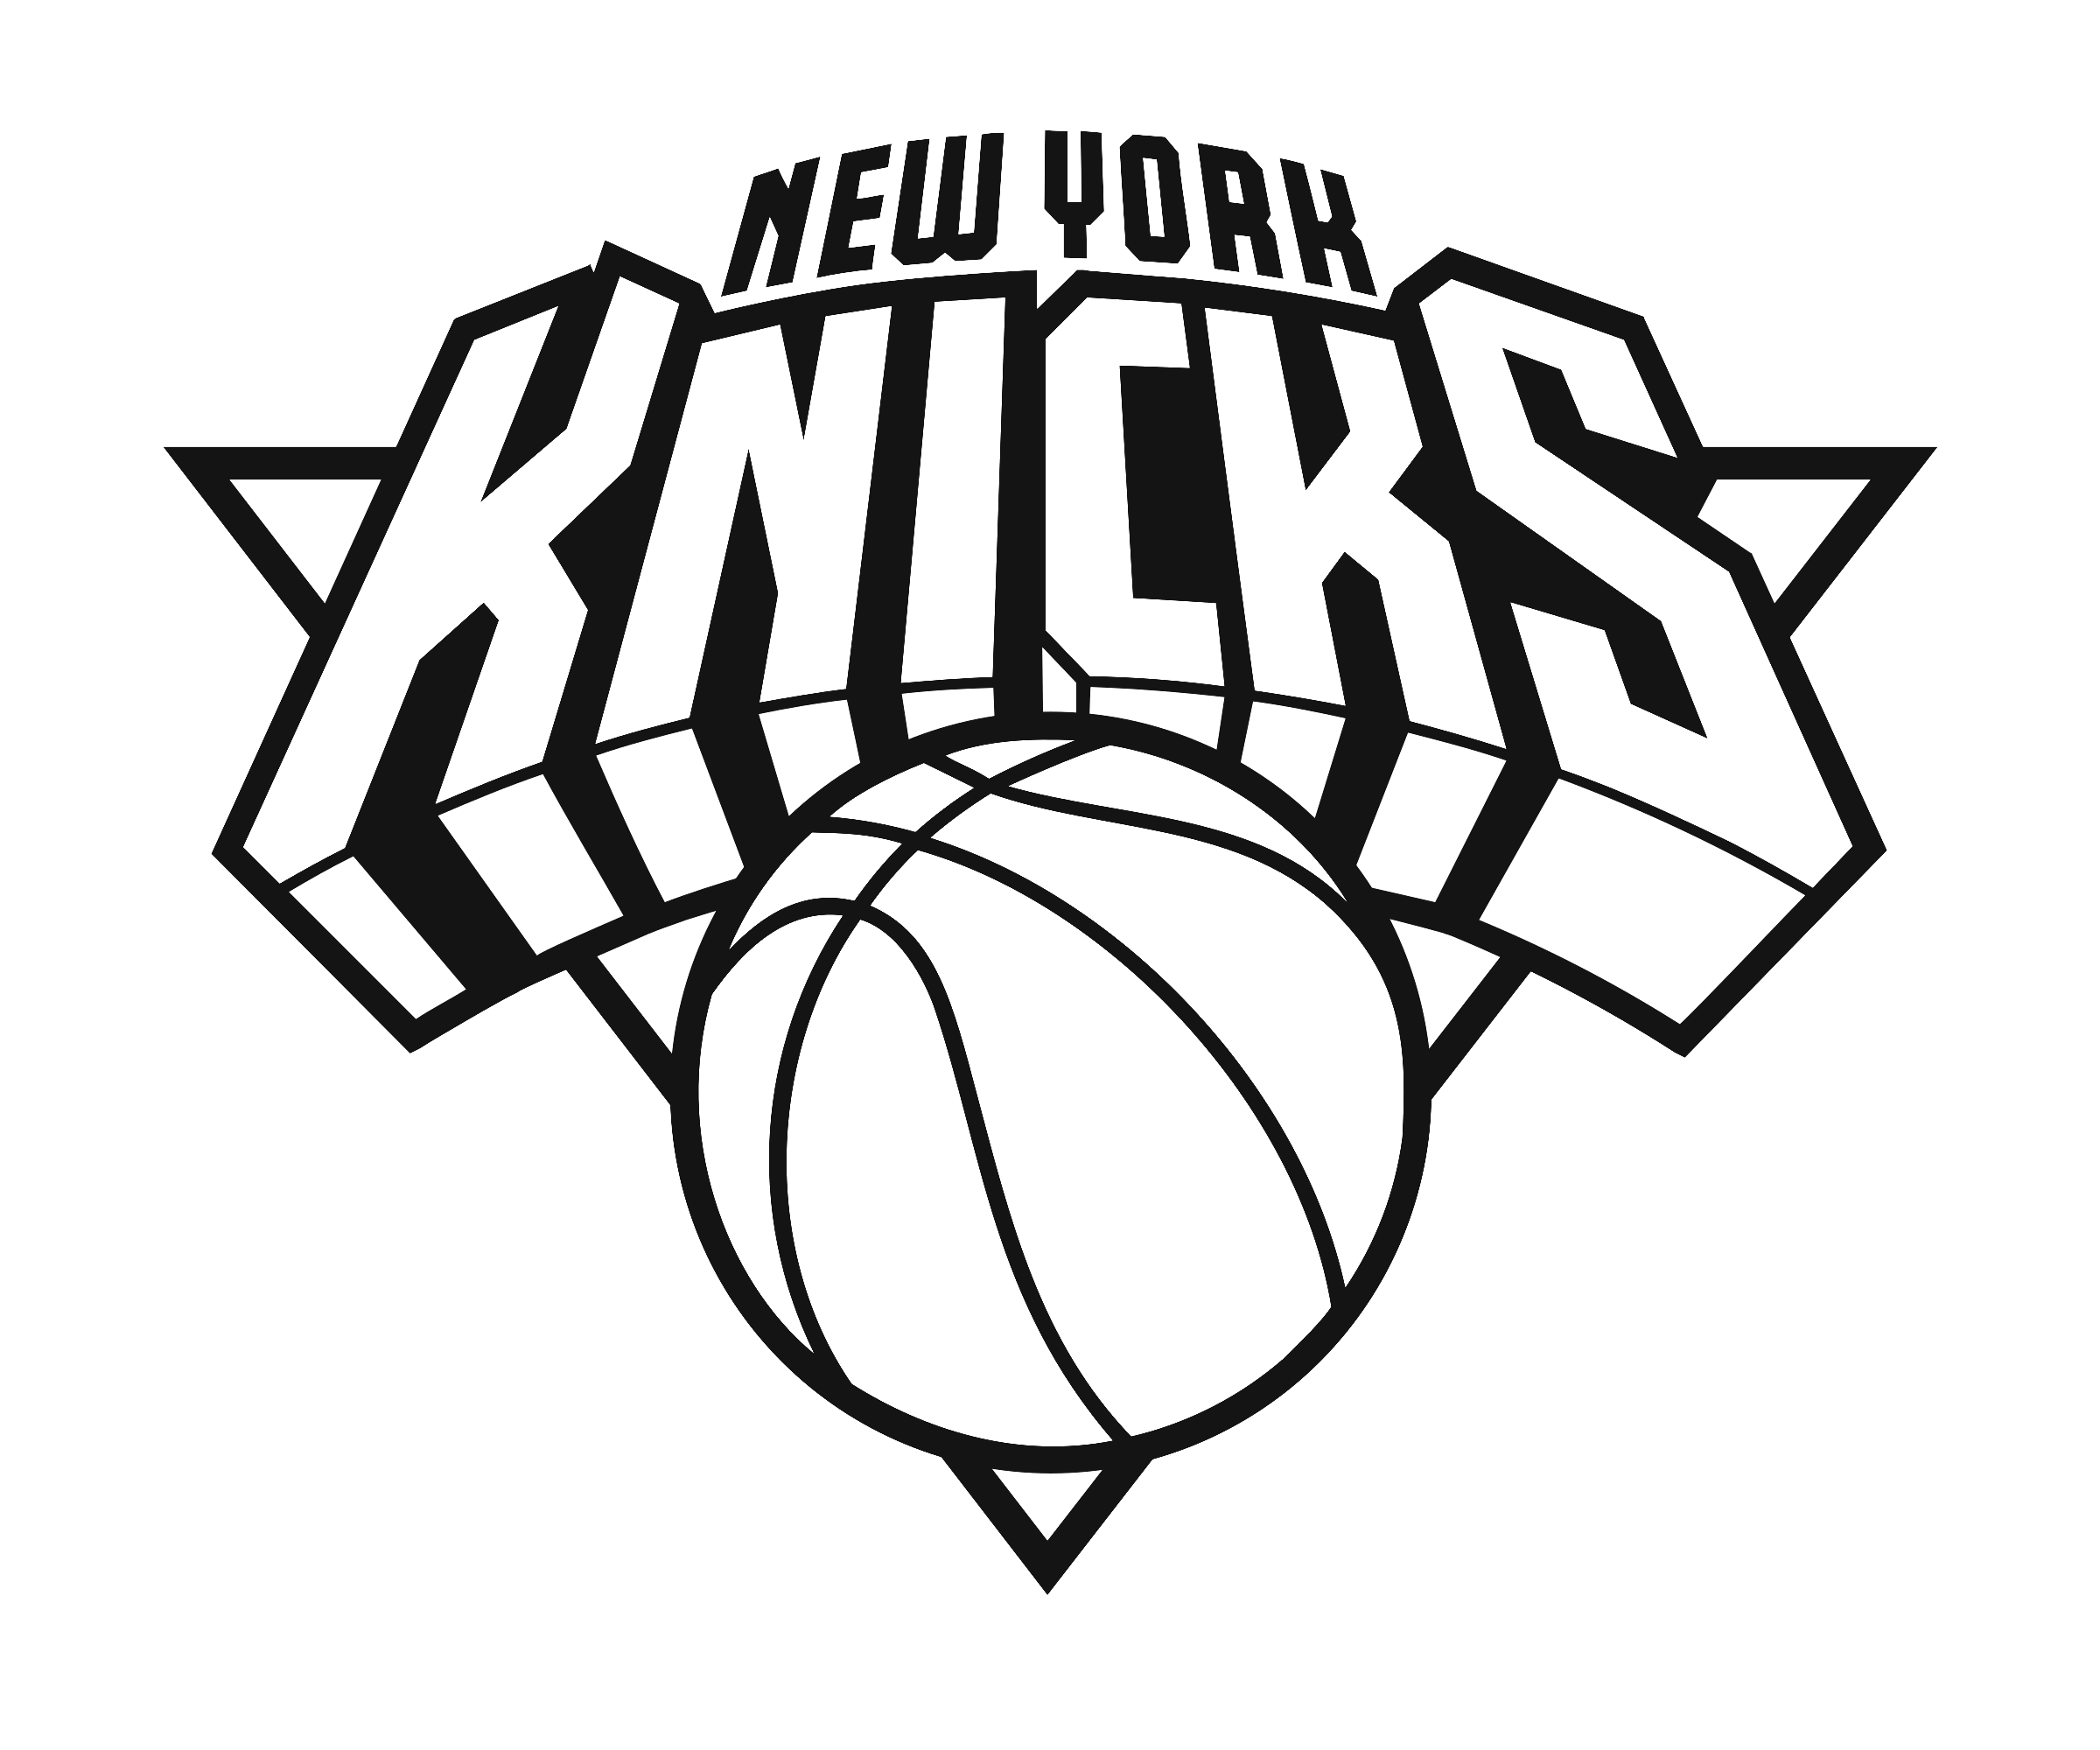 New York Knicks Logo - New York Knicks Logo PNG Transparent & SVG Vector